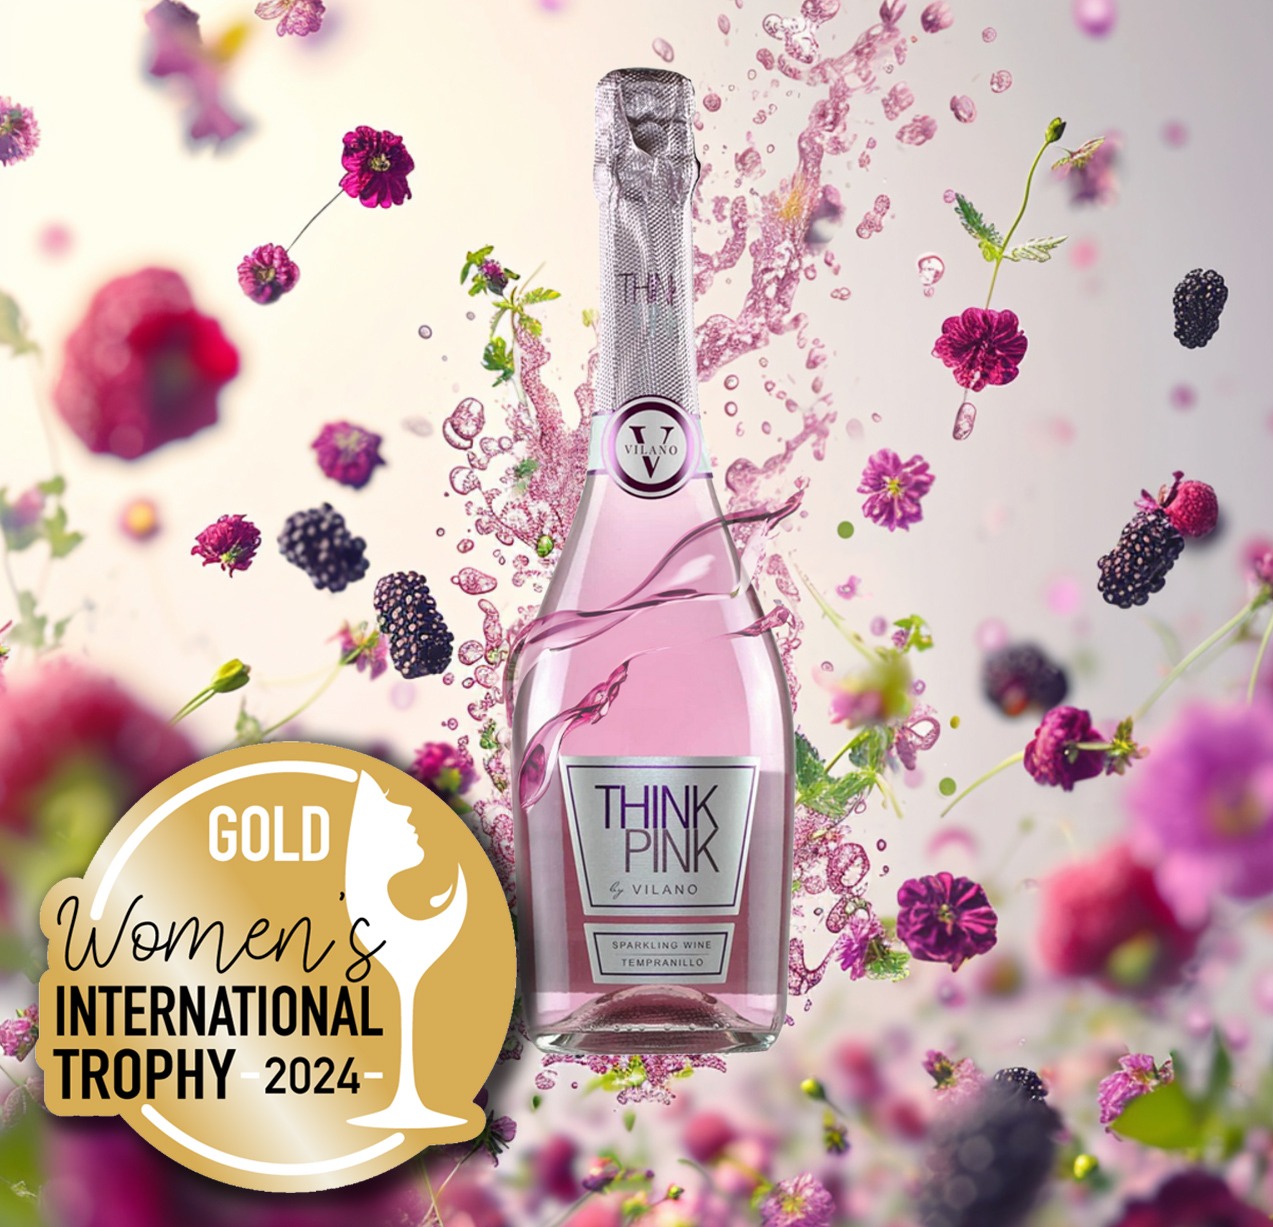 Think Pink gold medal Women’s International Trophy 2024